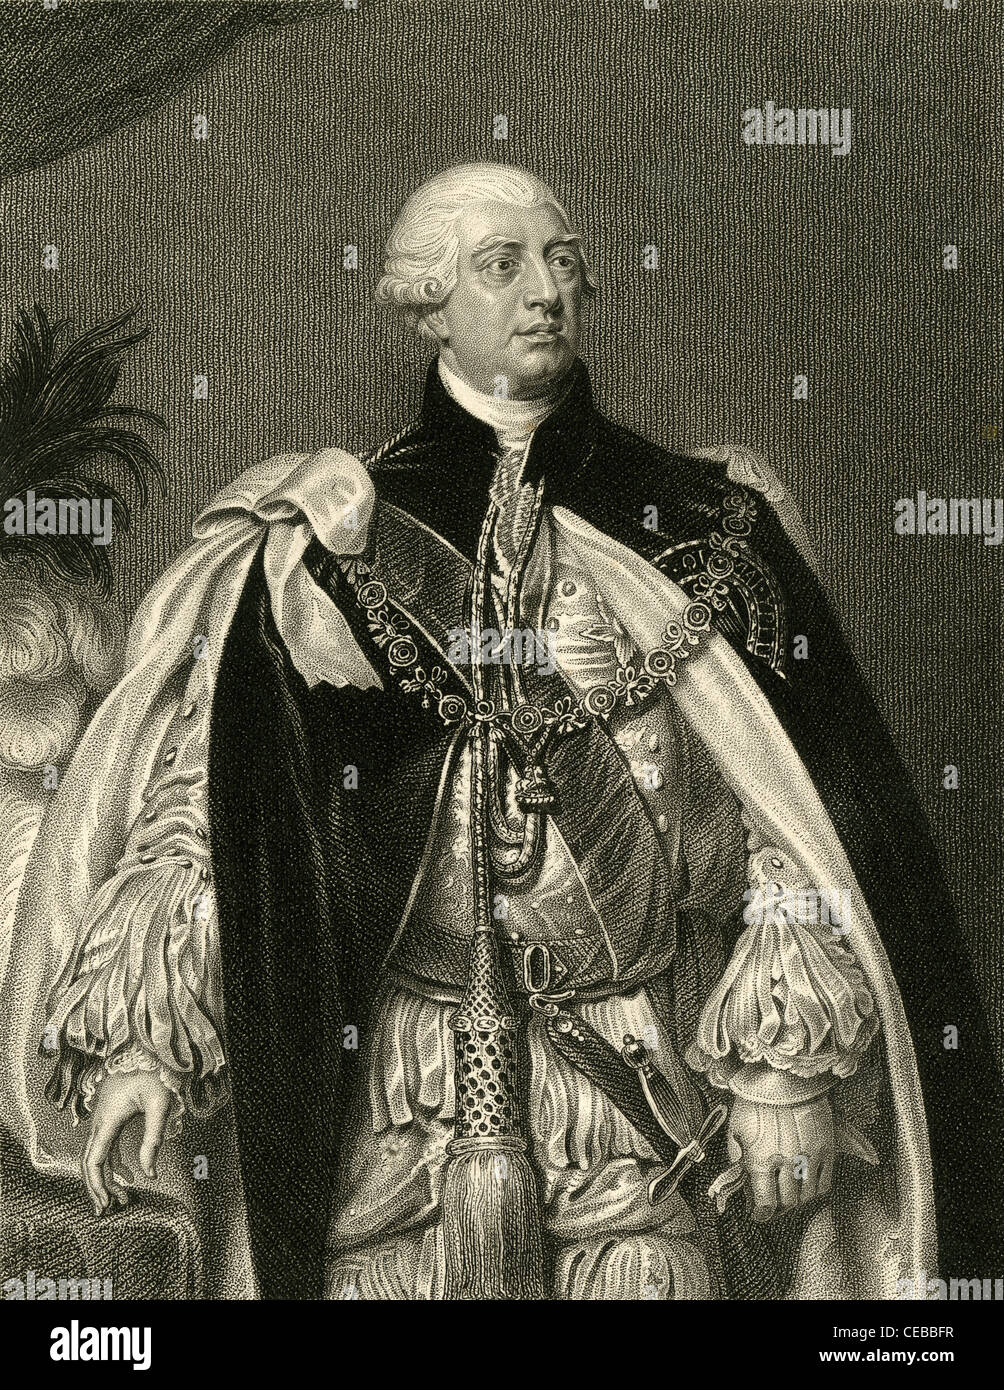 1830 engraving of King George III (George William Frederick). Stock Photo